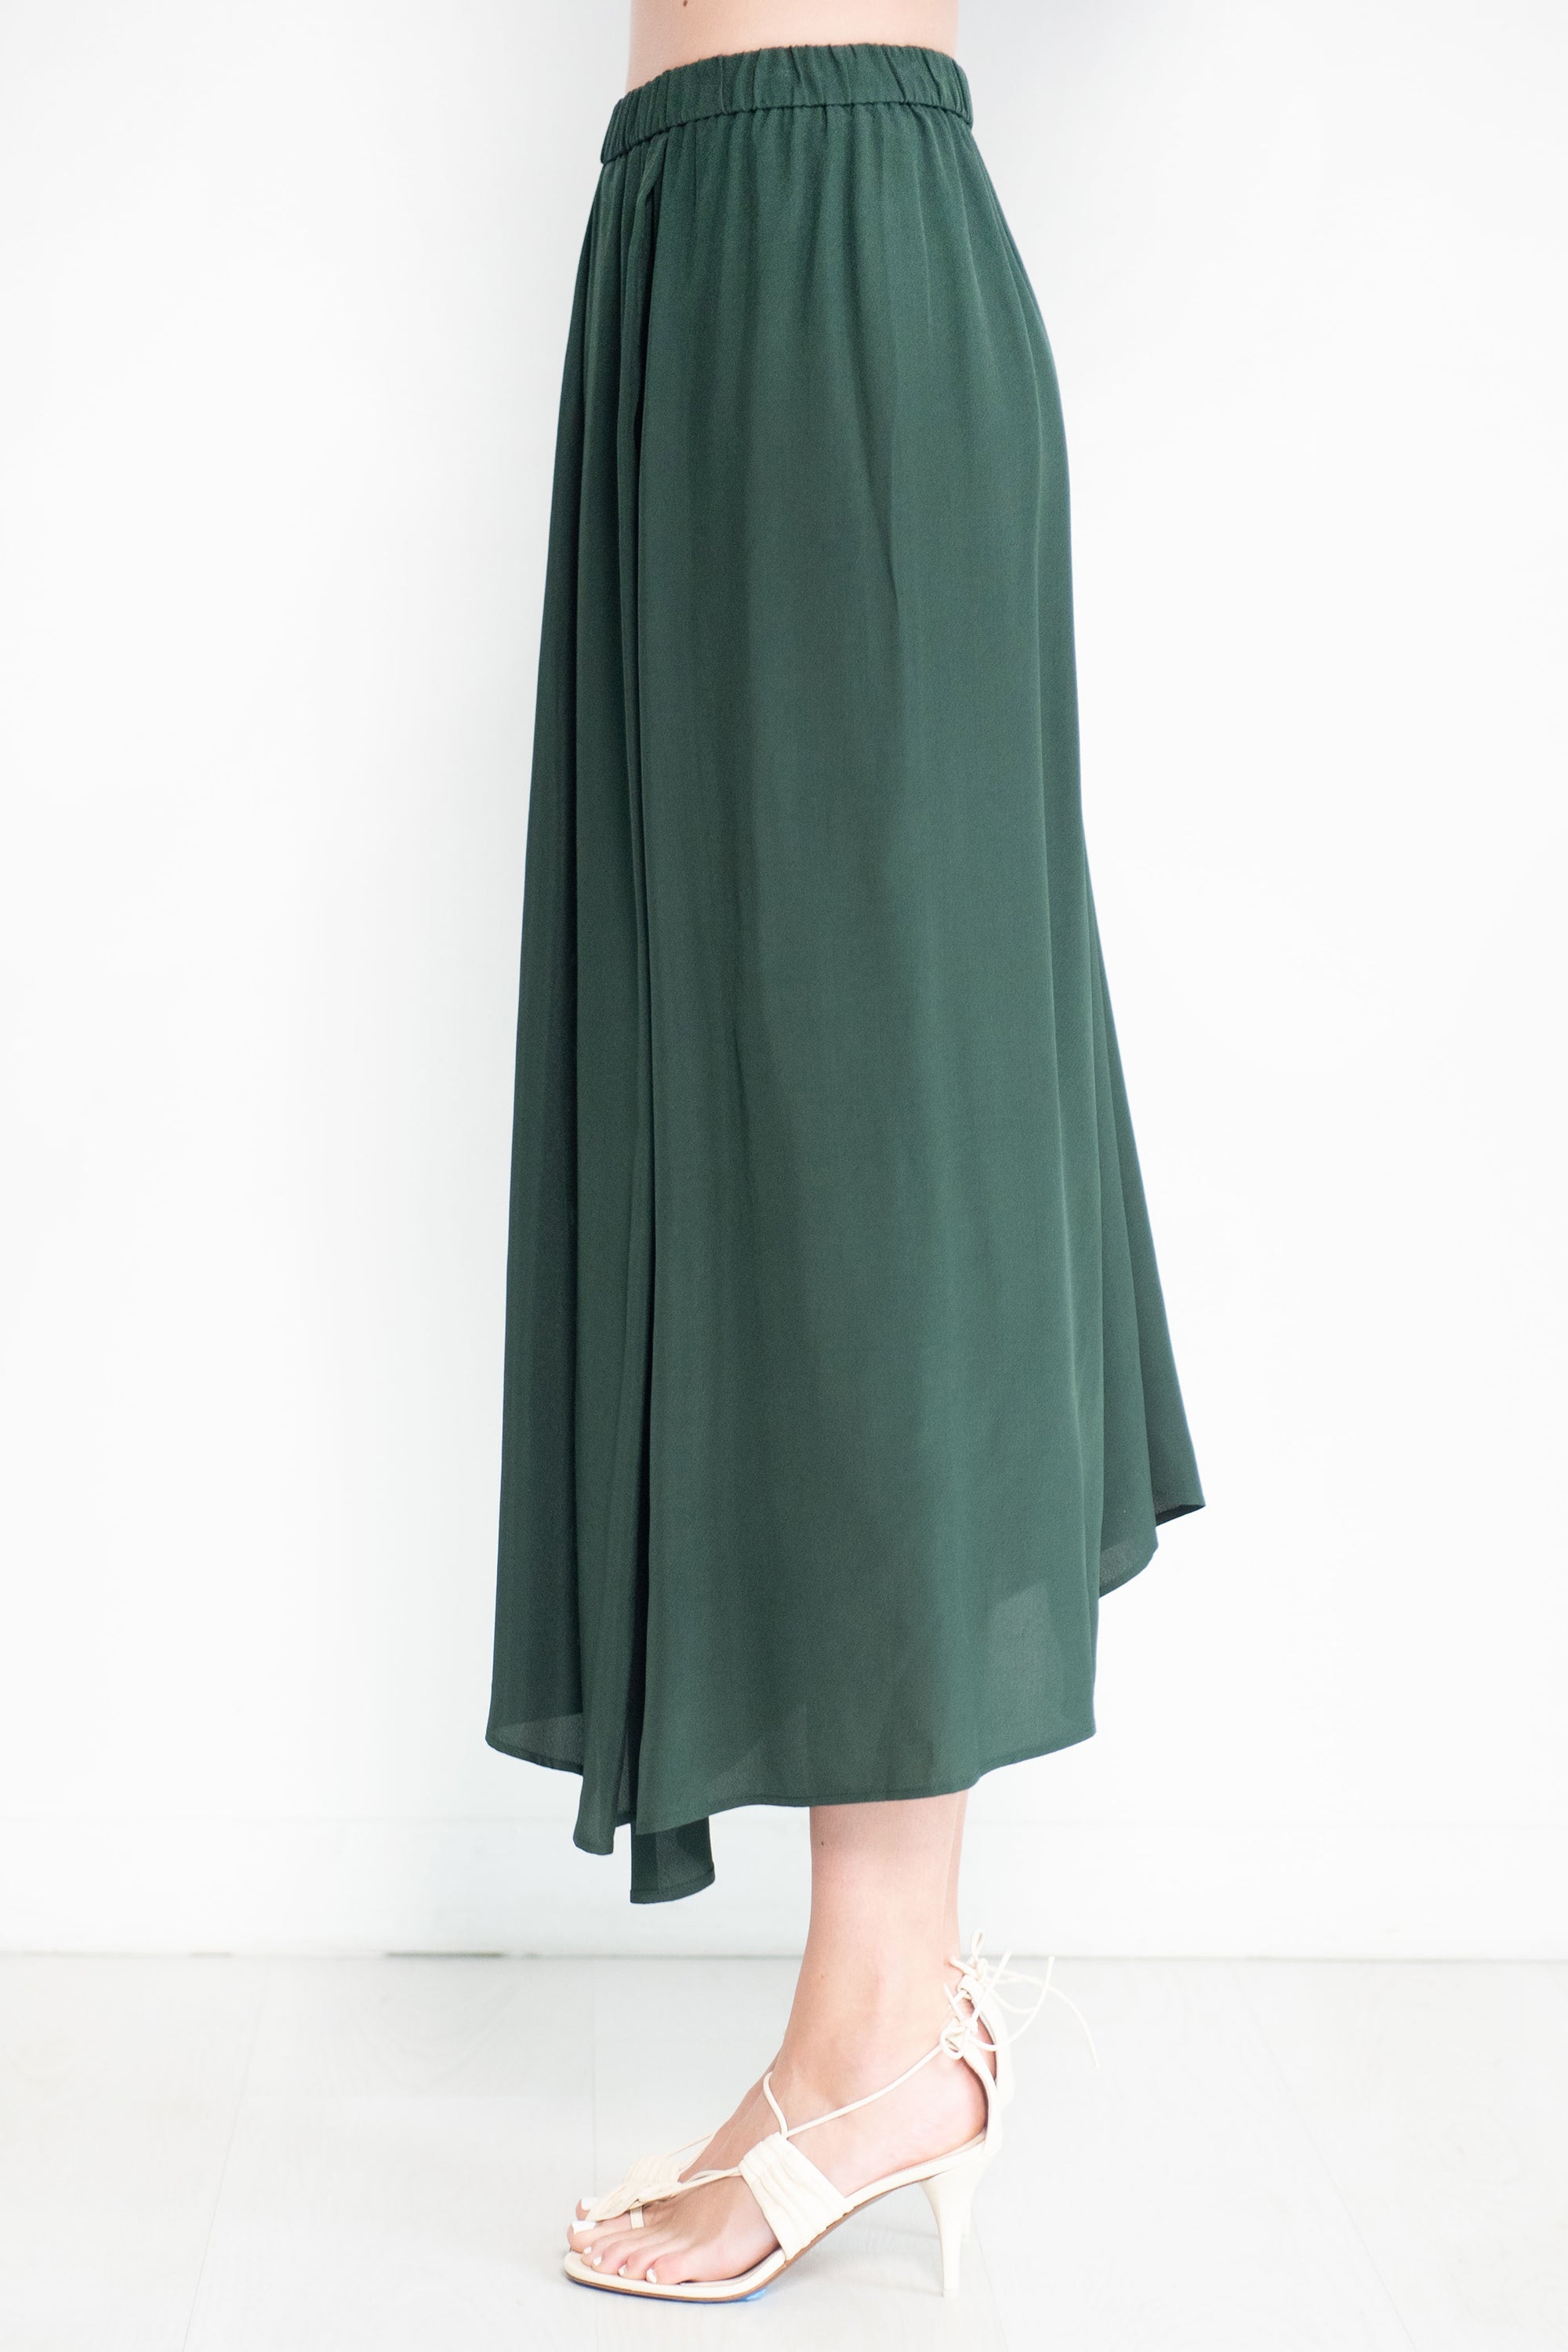 GREEN CIRCLE SKIRT Renaissance Skirt, Linen Skirt for Women